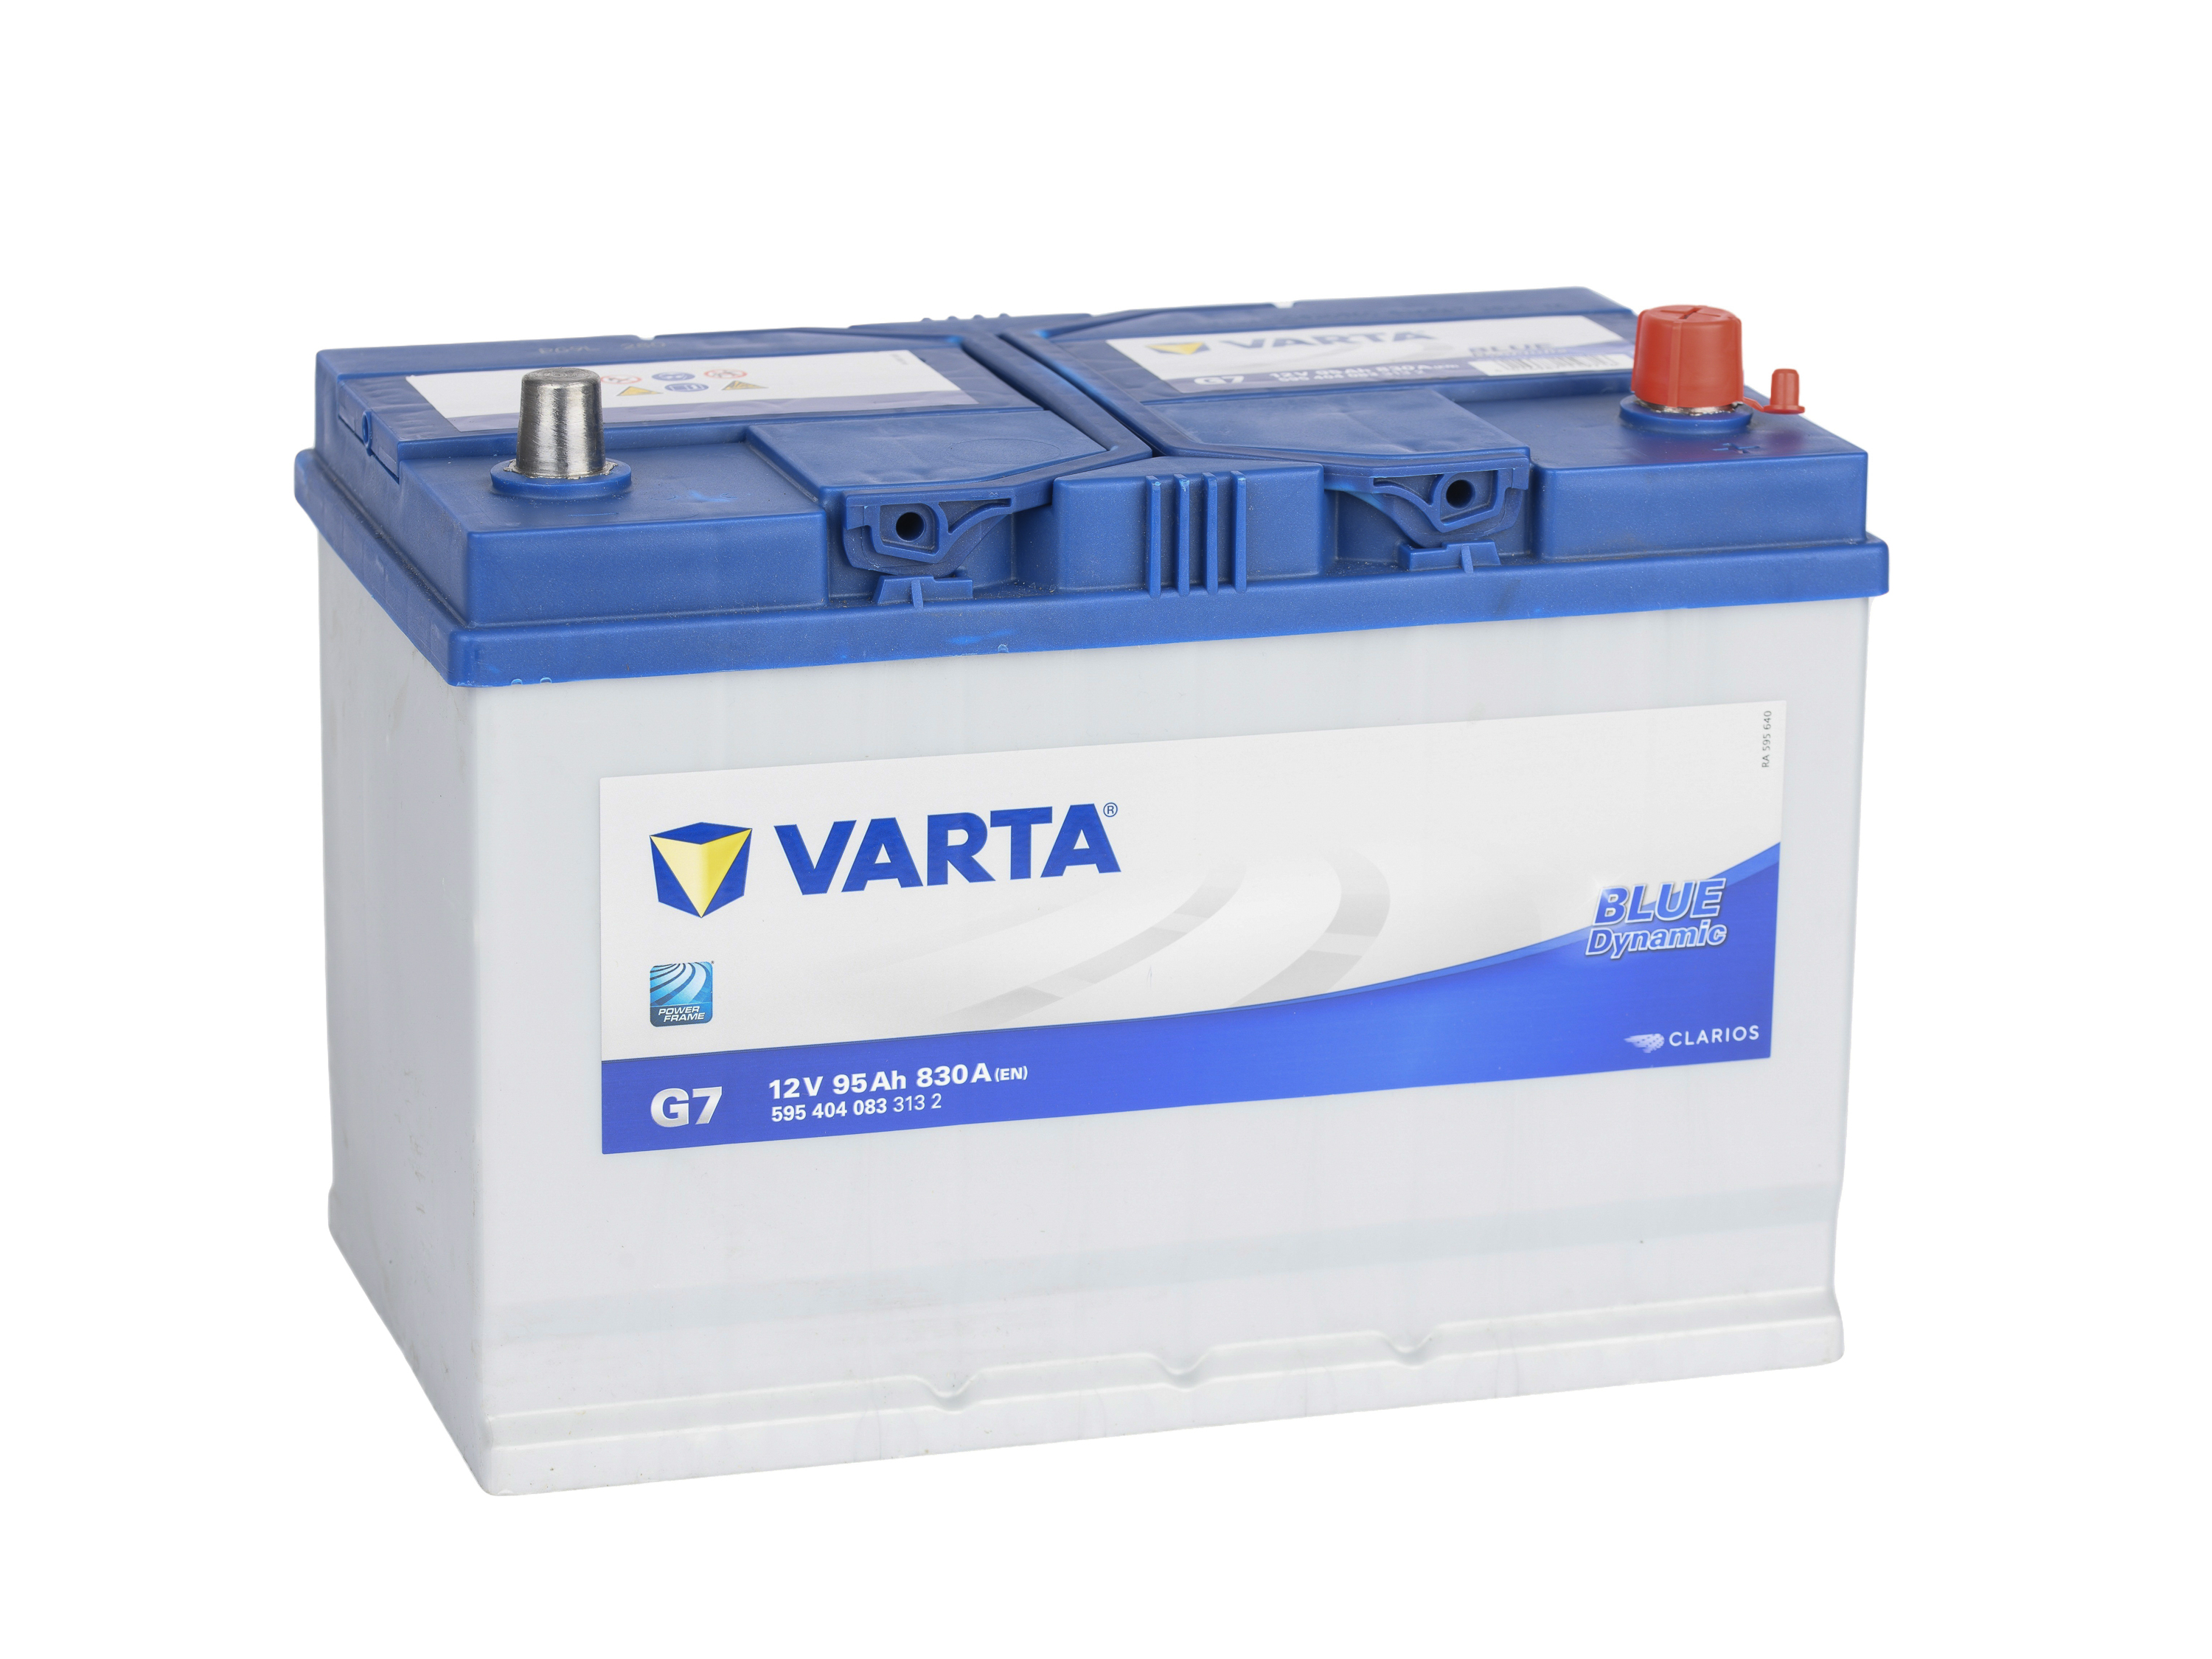 VARTA Battery Blue Dynamic G7 595.404.083 12V/95AH